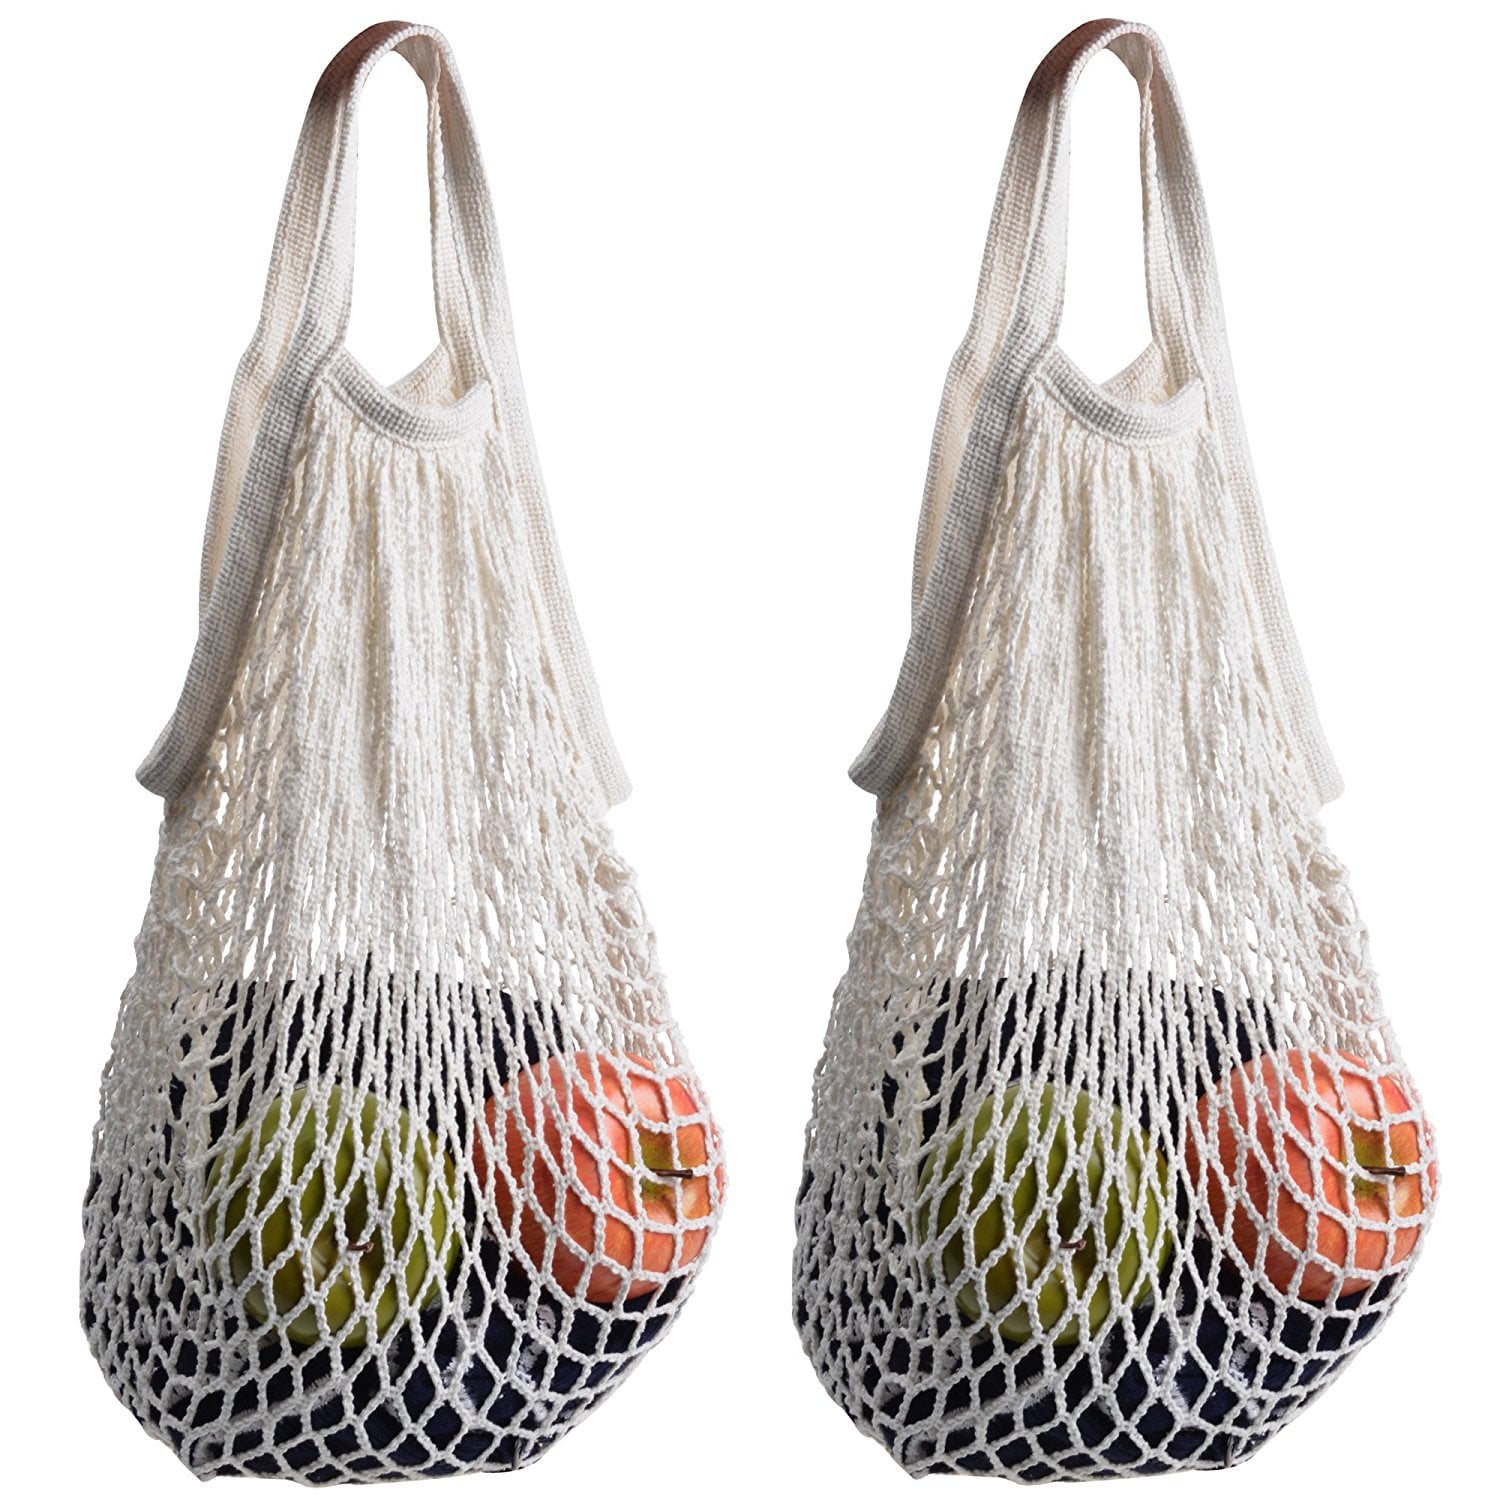 String bag trend 2017 – Net grocery bag trend 2017